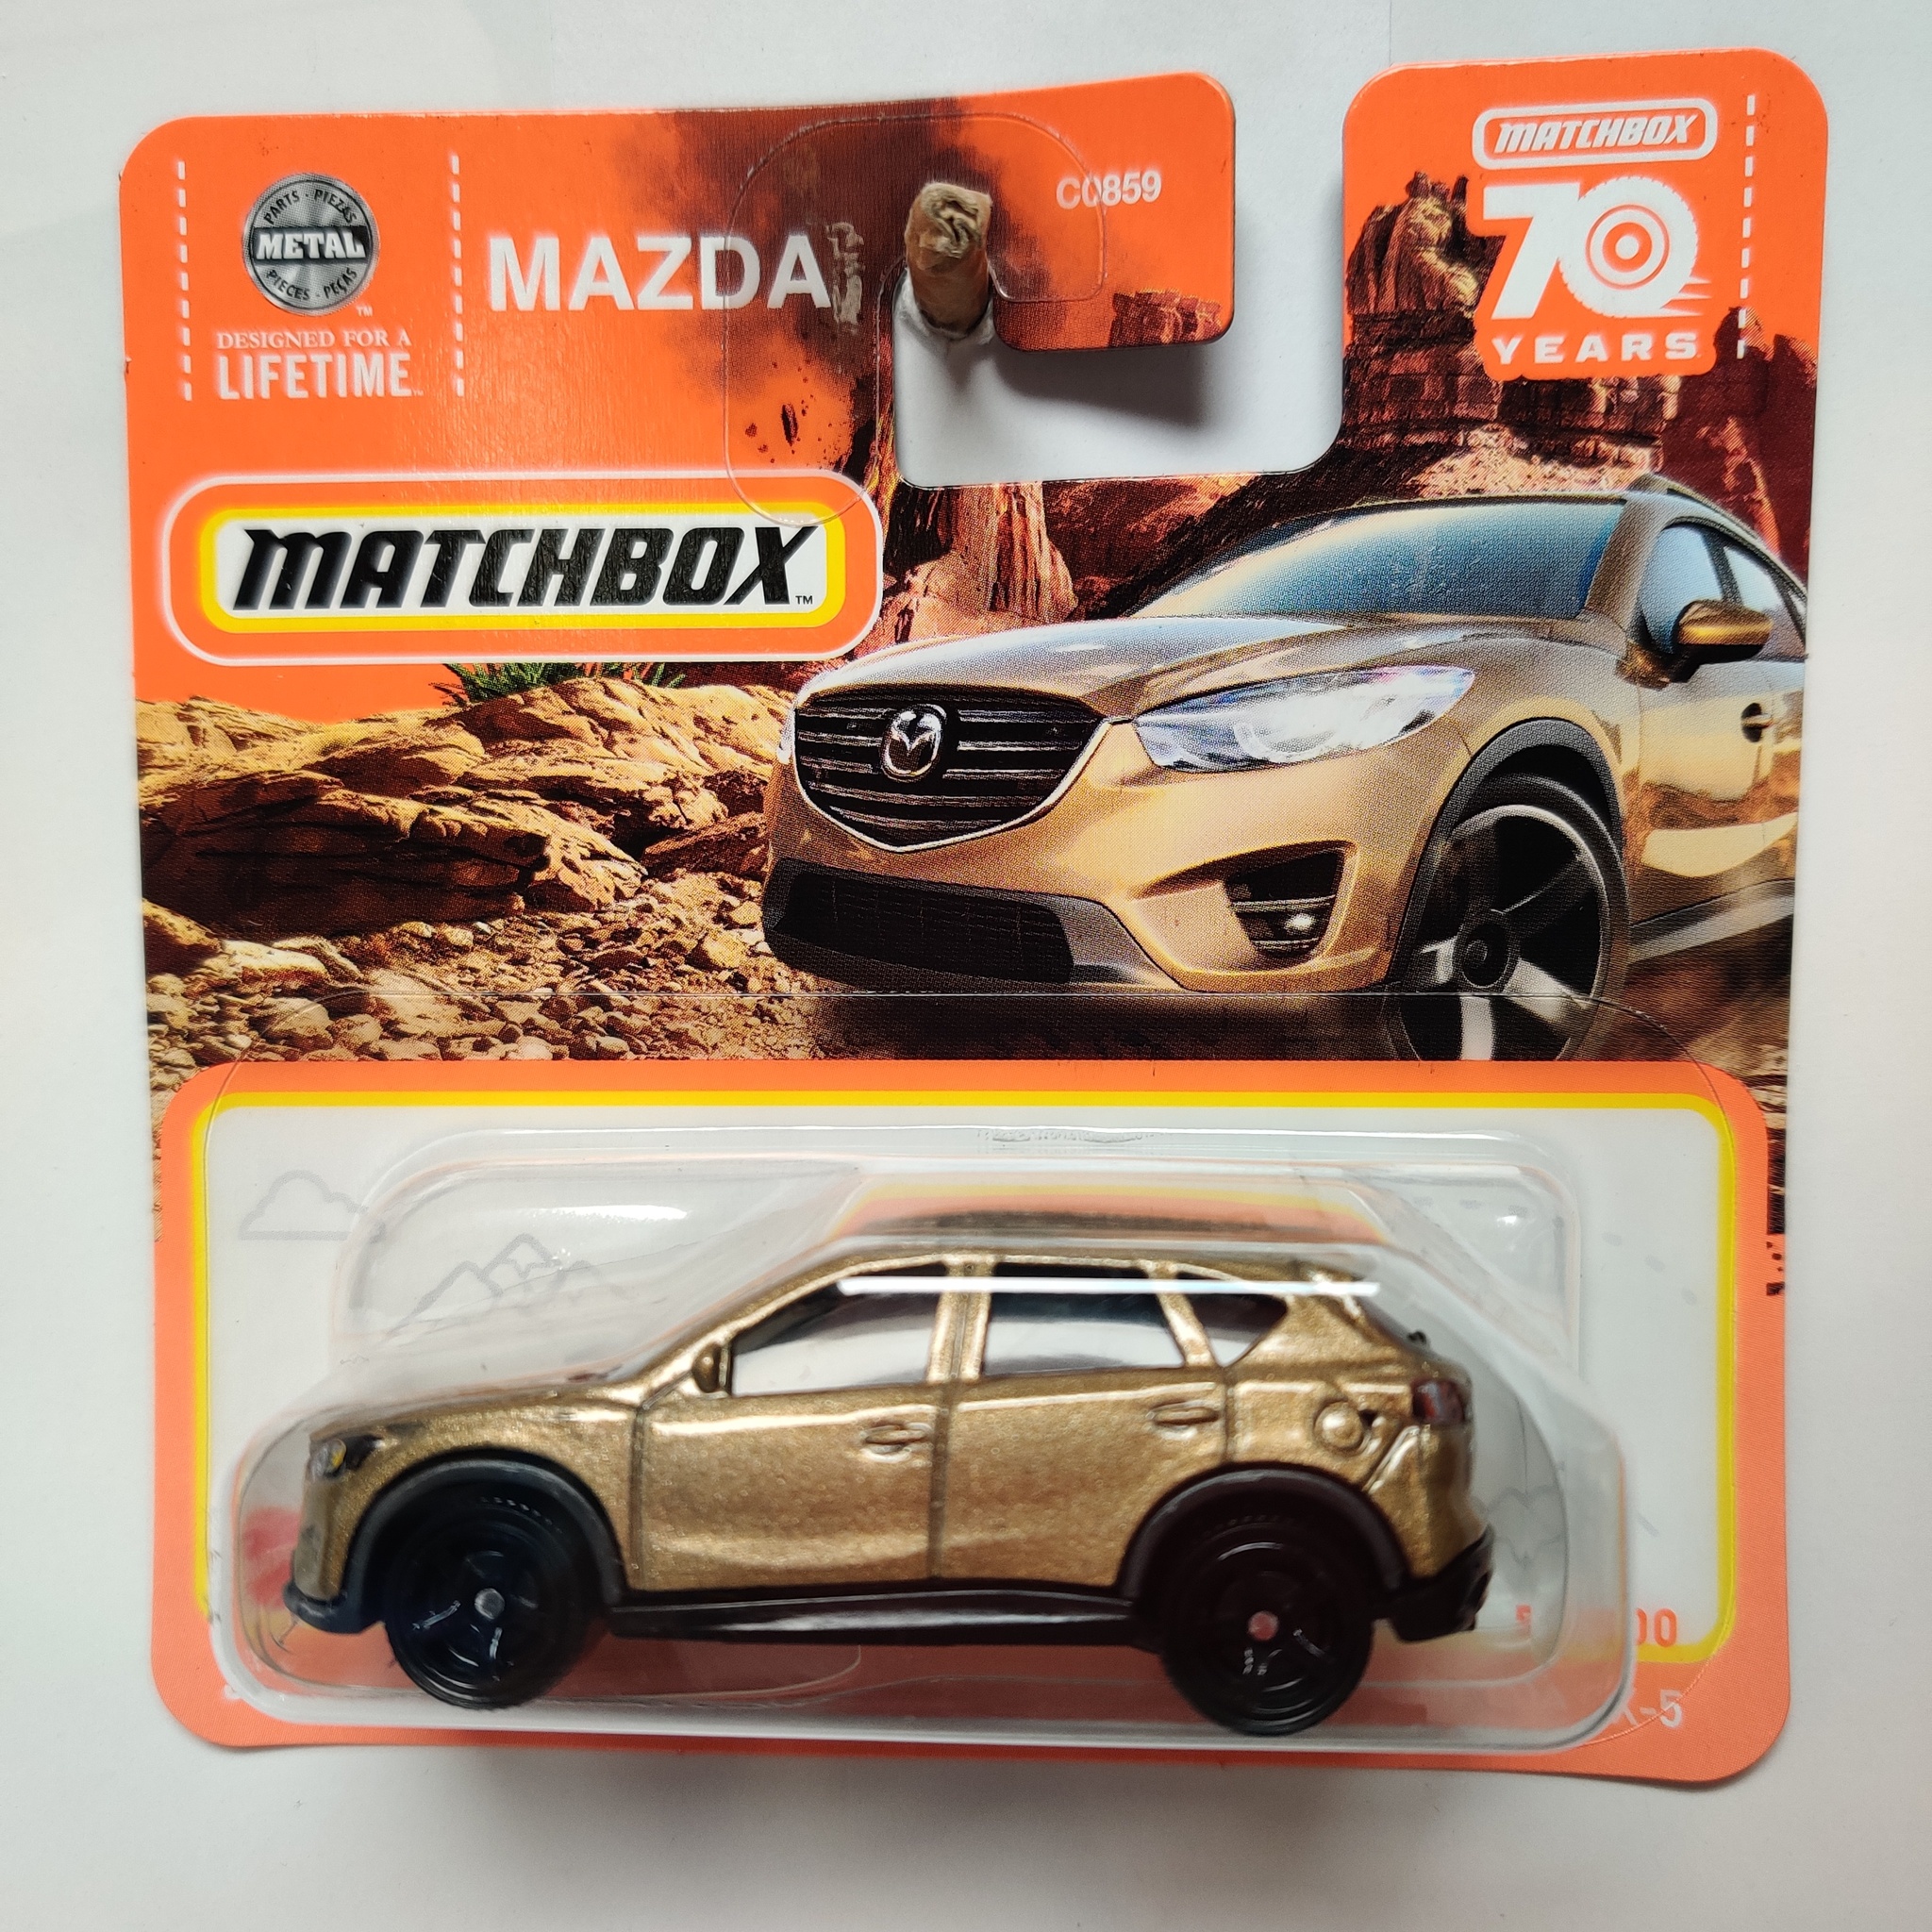 Skala 1/64 Matchbox "70-years" Mazda CX-5